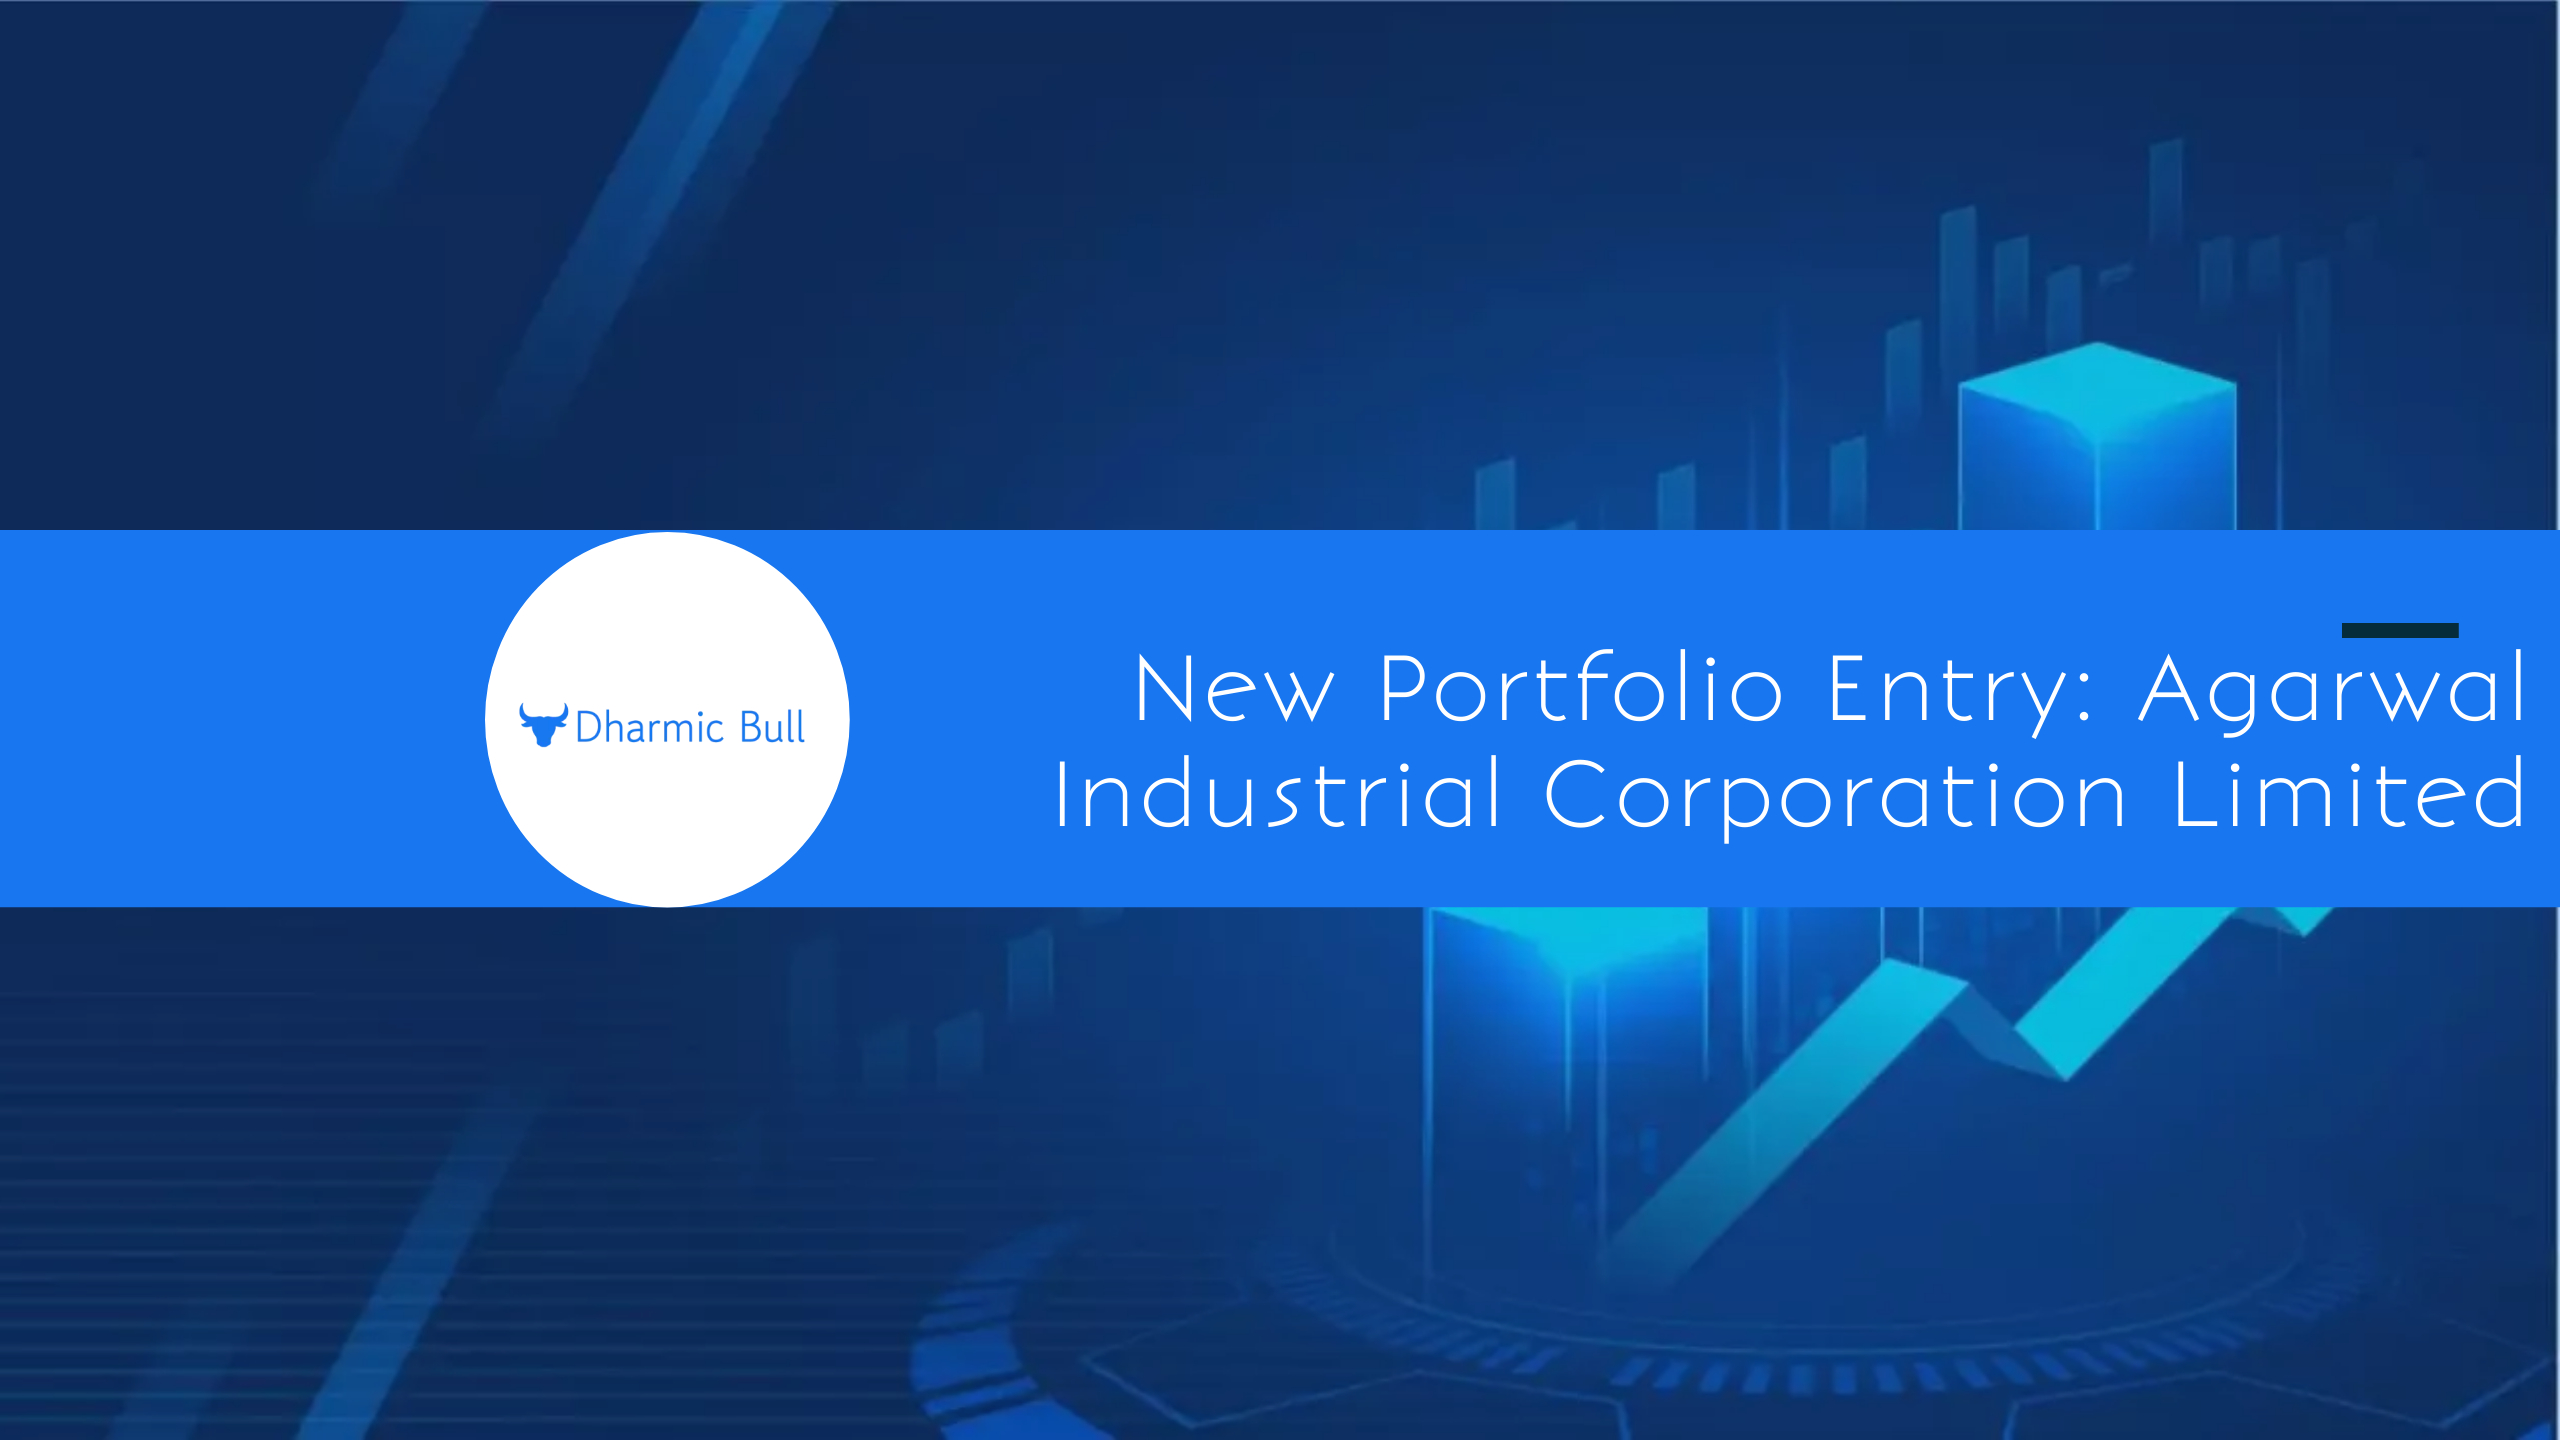 New Portfolio Entry: Agarwal Industrial Corporation Limited